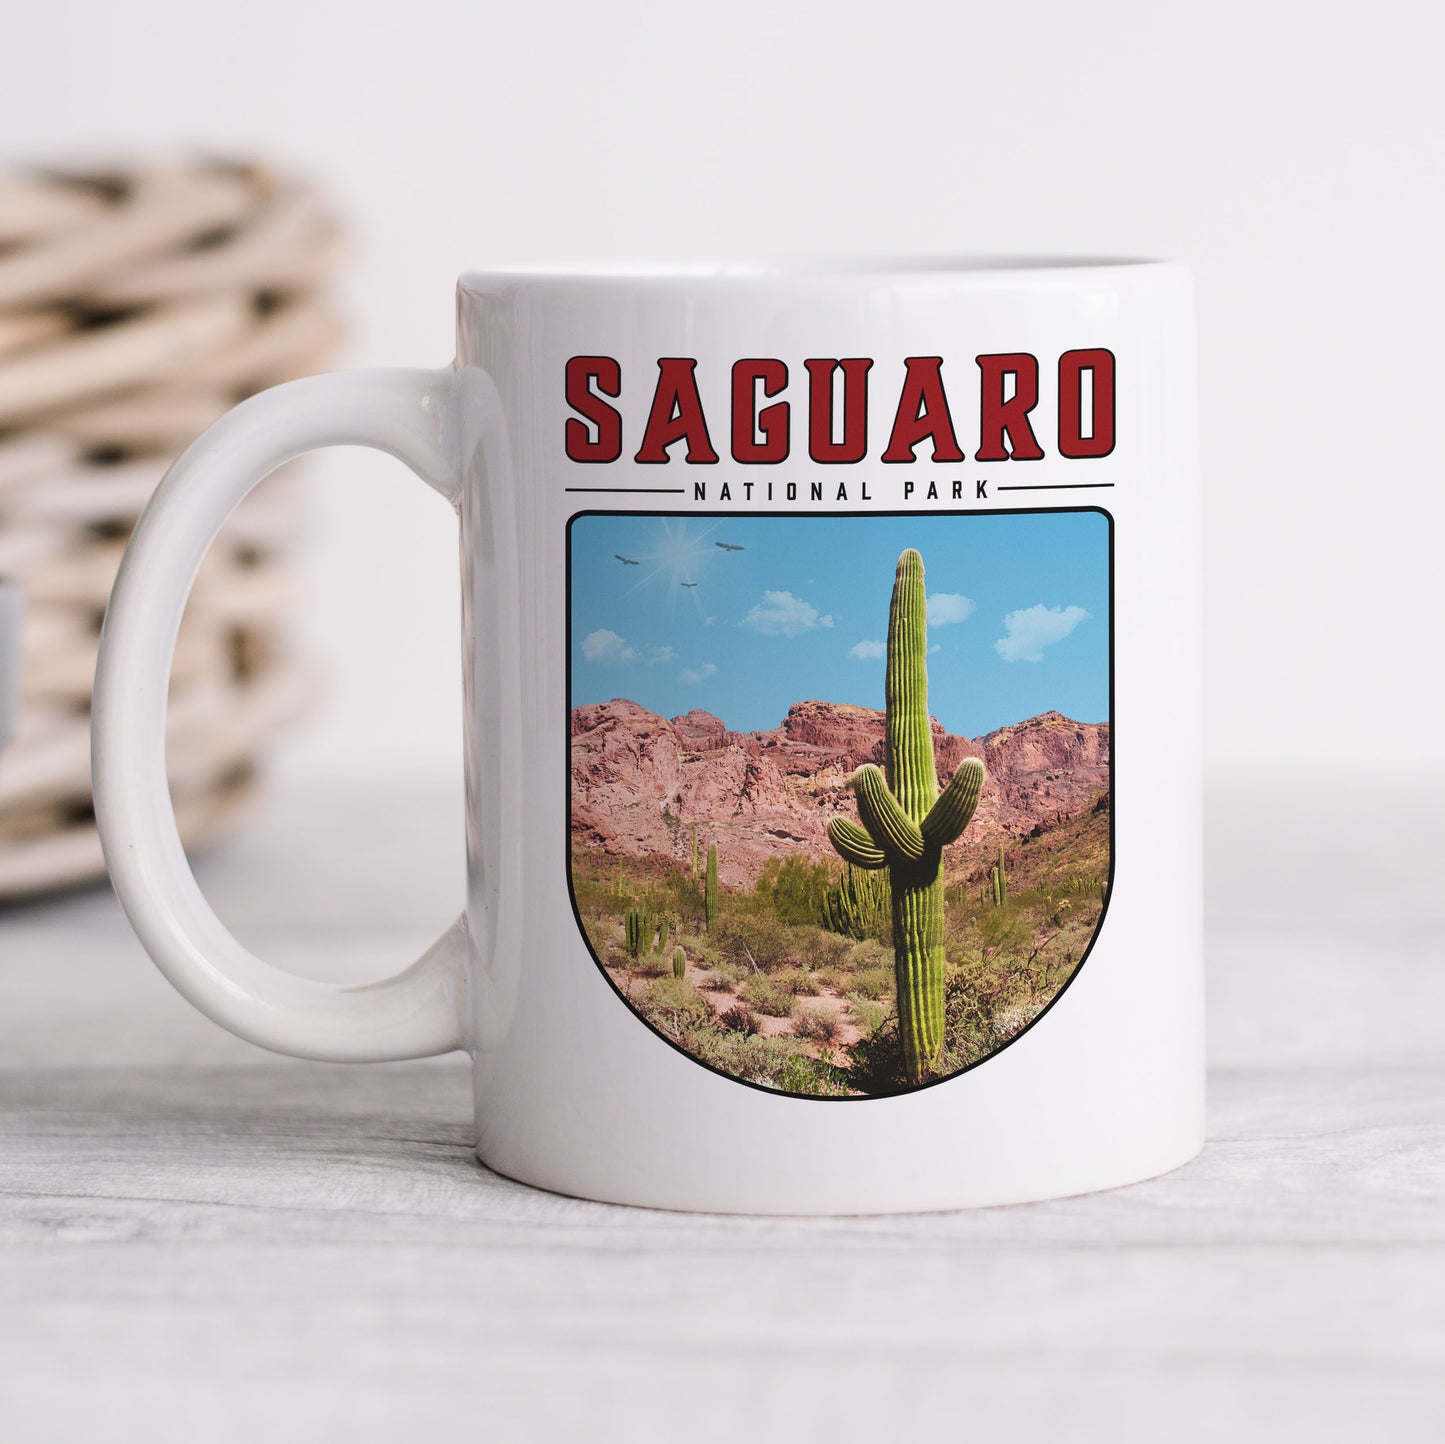 Saguaro National Park - Ceramic Mug